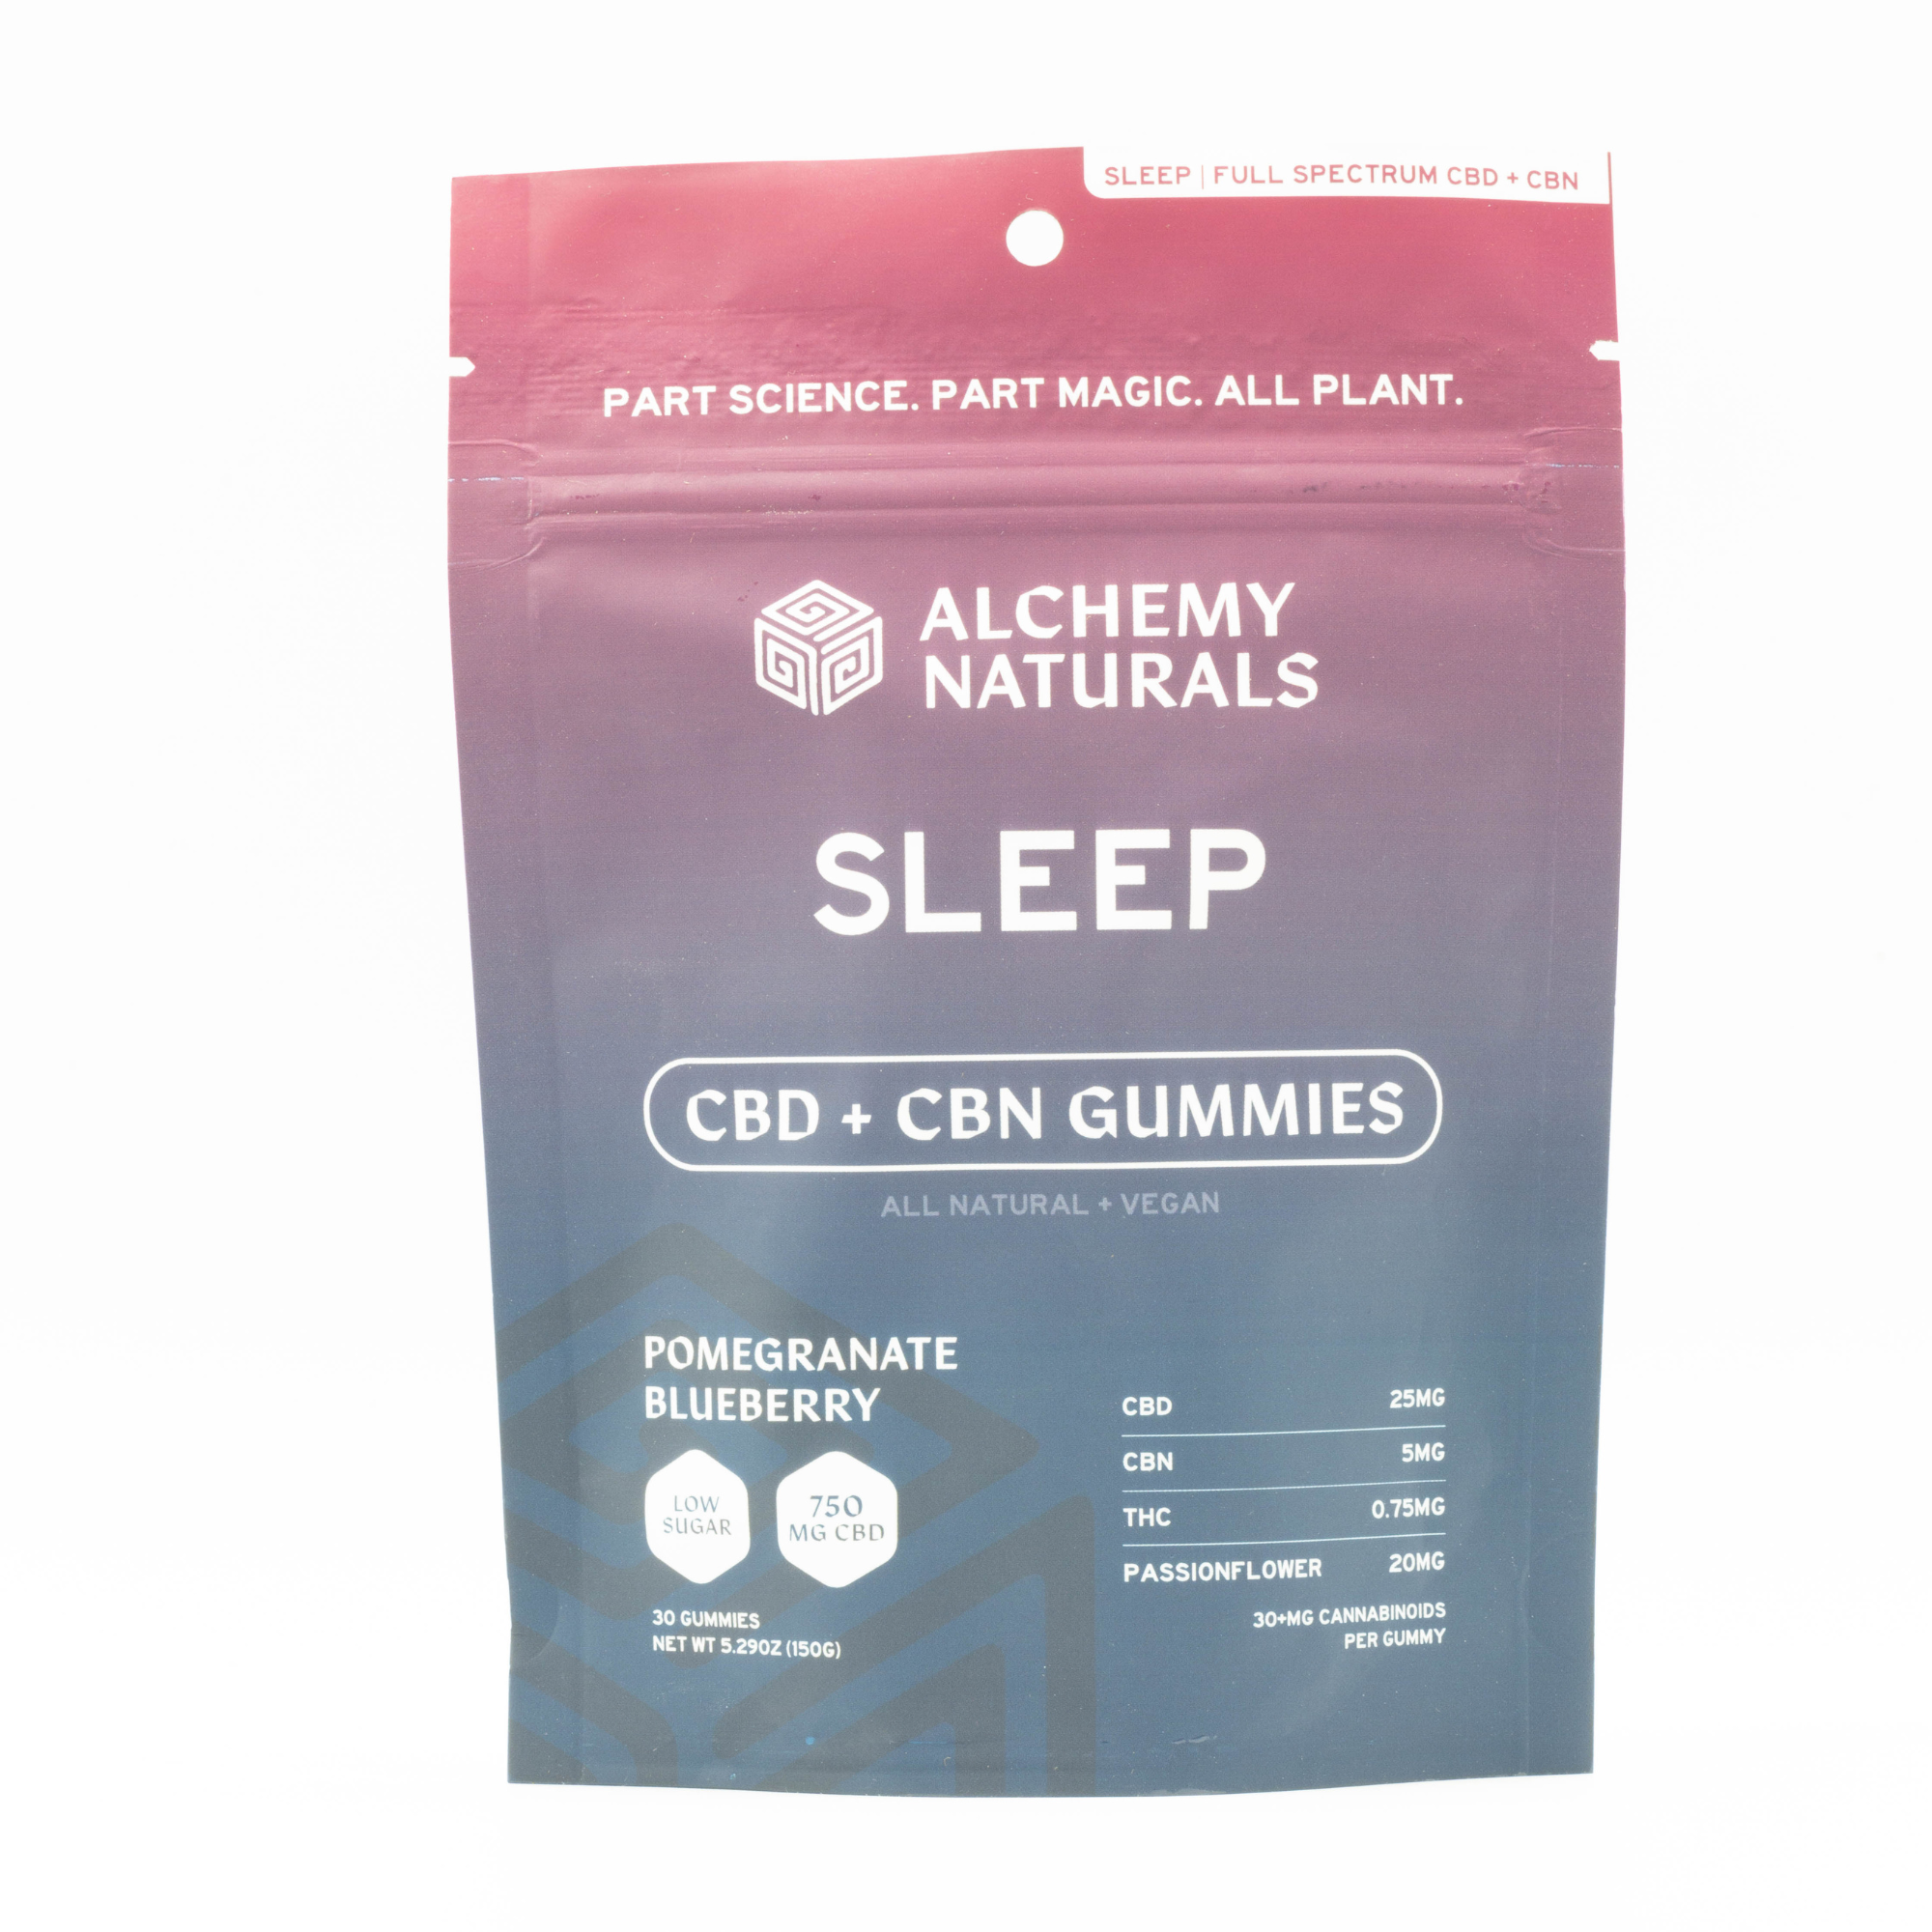 Sleep - CBD + CBN Gummies